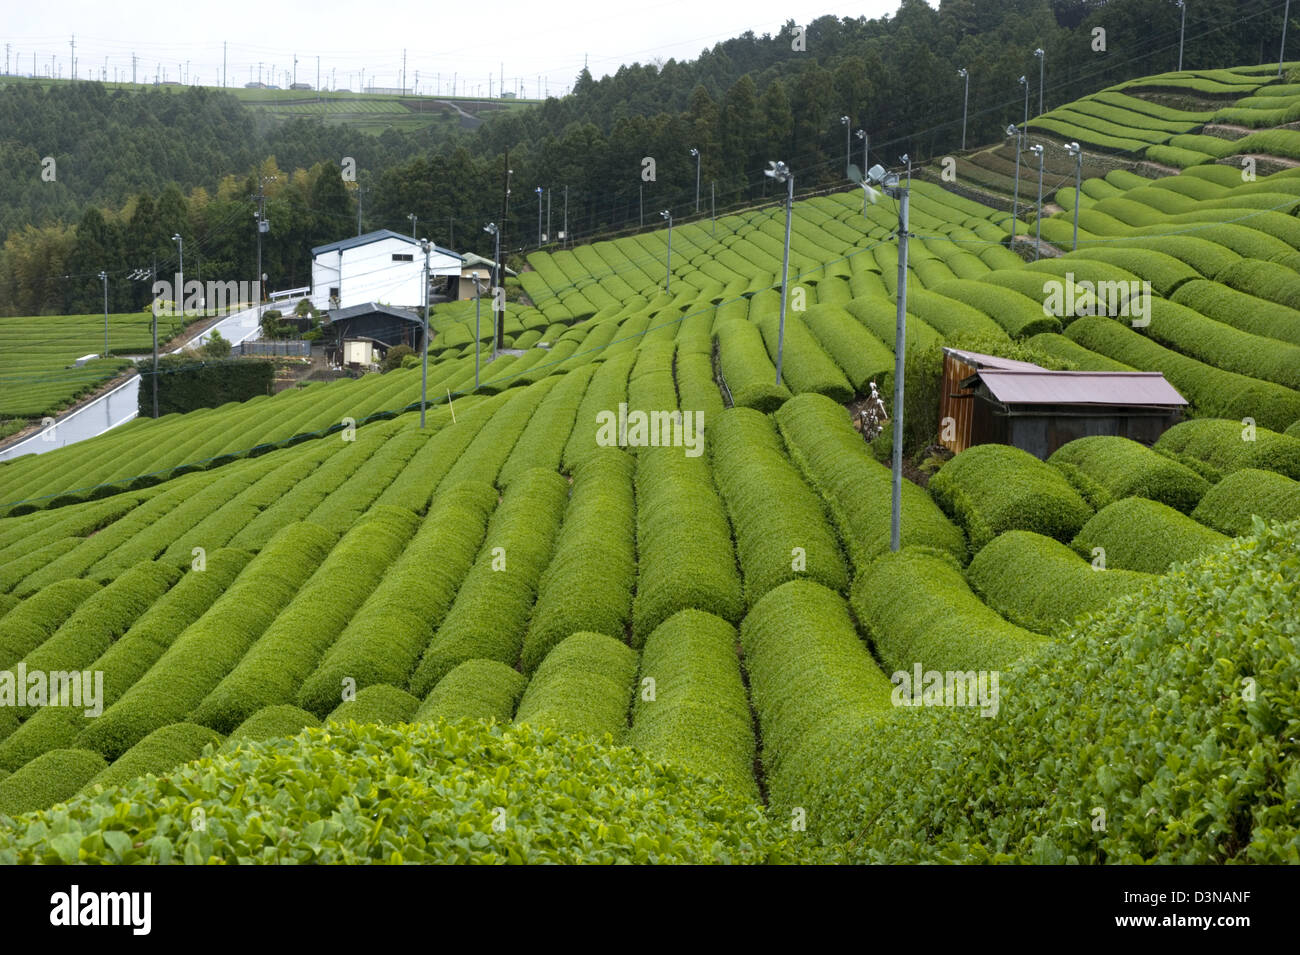 Rows of fresh green tea bushes growing at a plantation in the Makinohara chabatake tea fields of Shizuoka Prefecture, Japan. Stock Photo